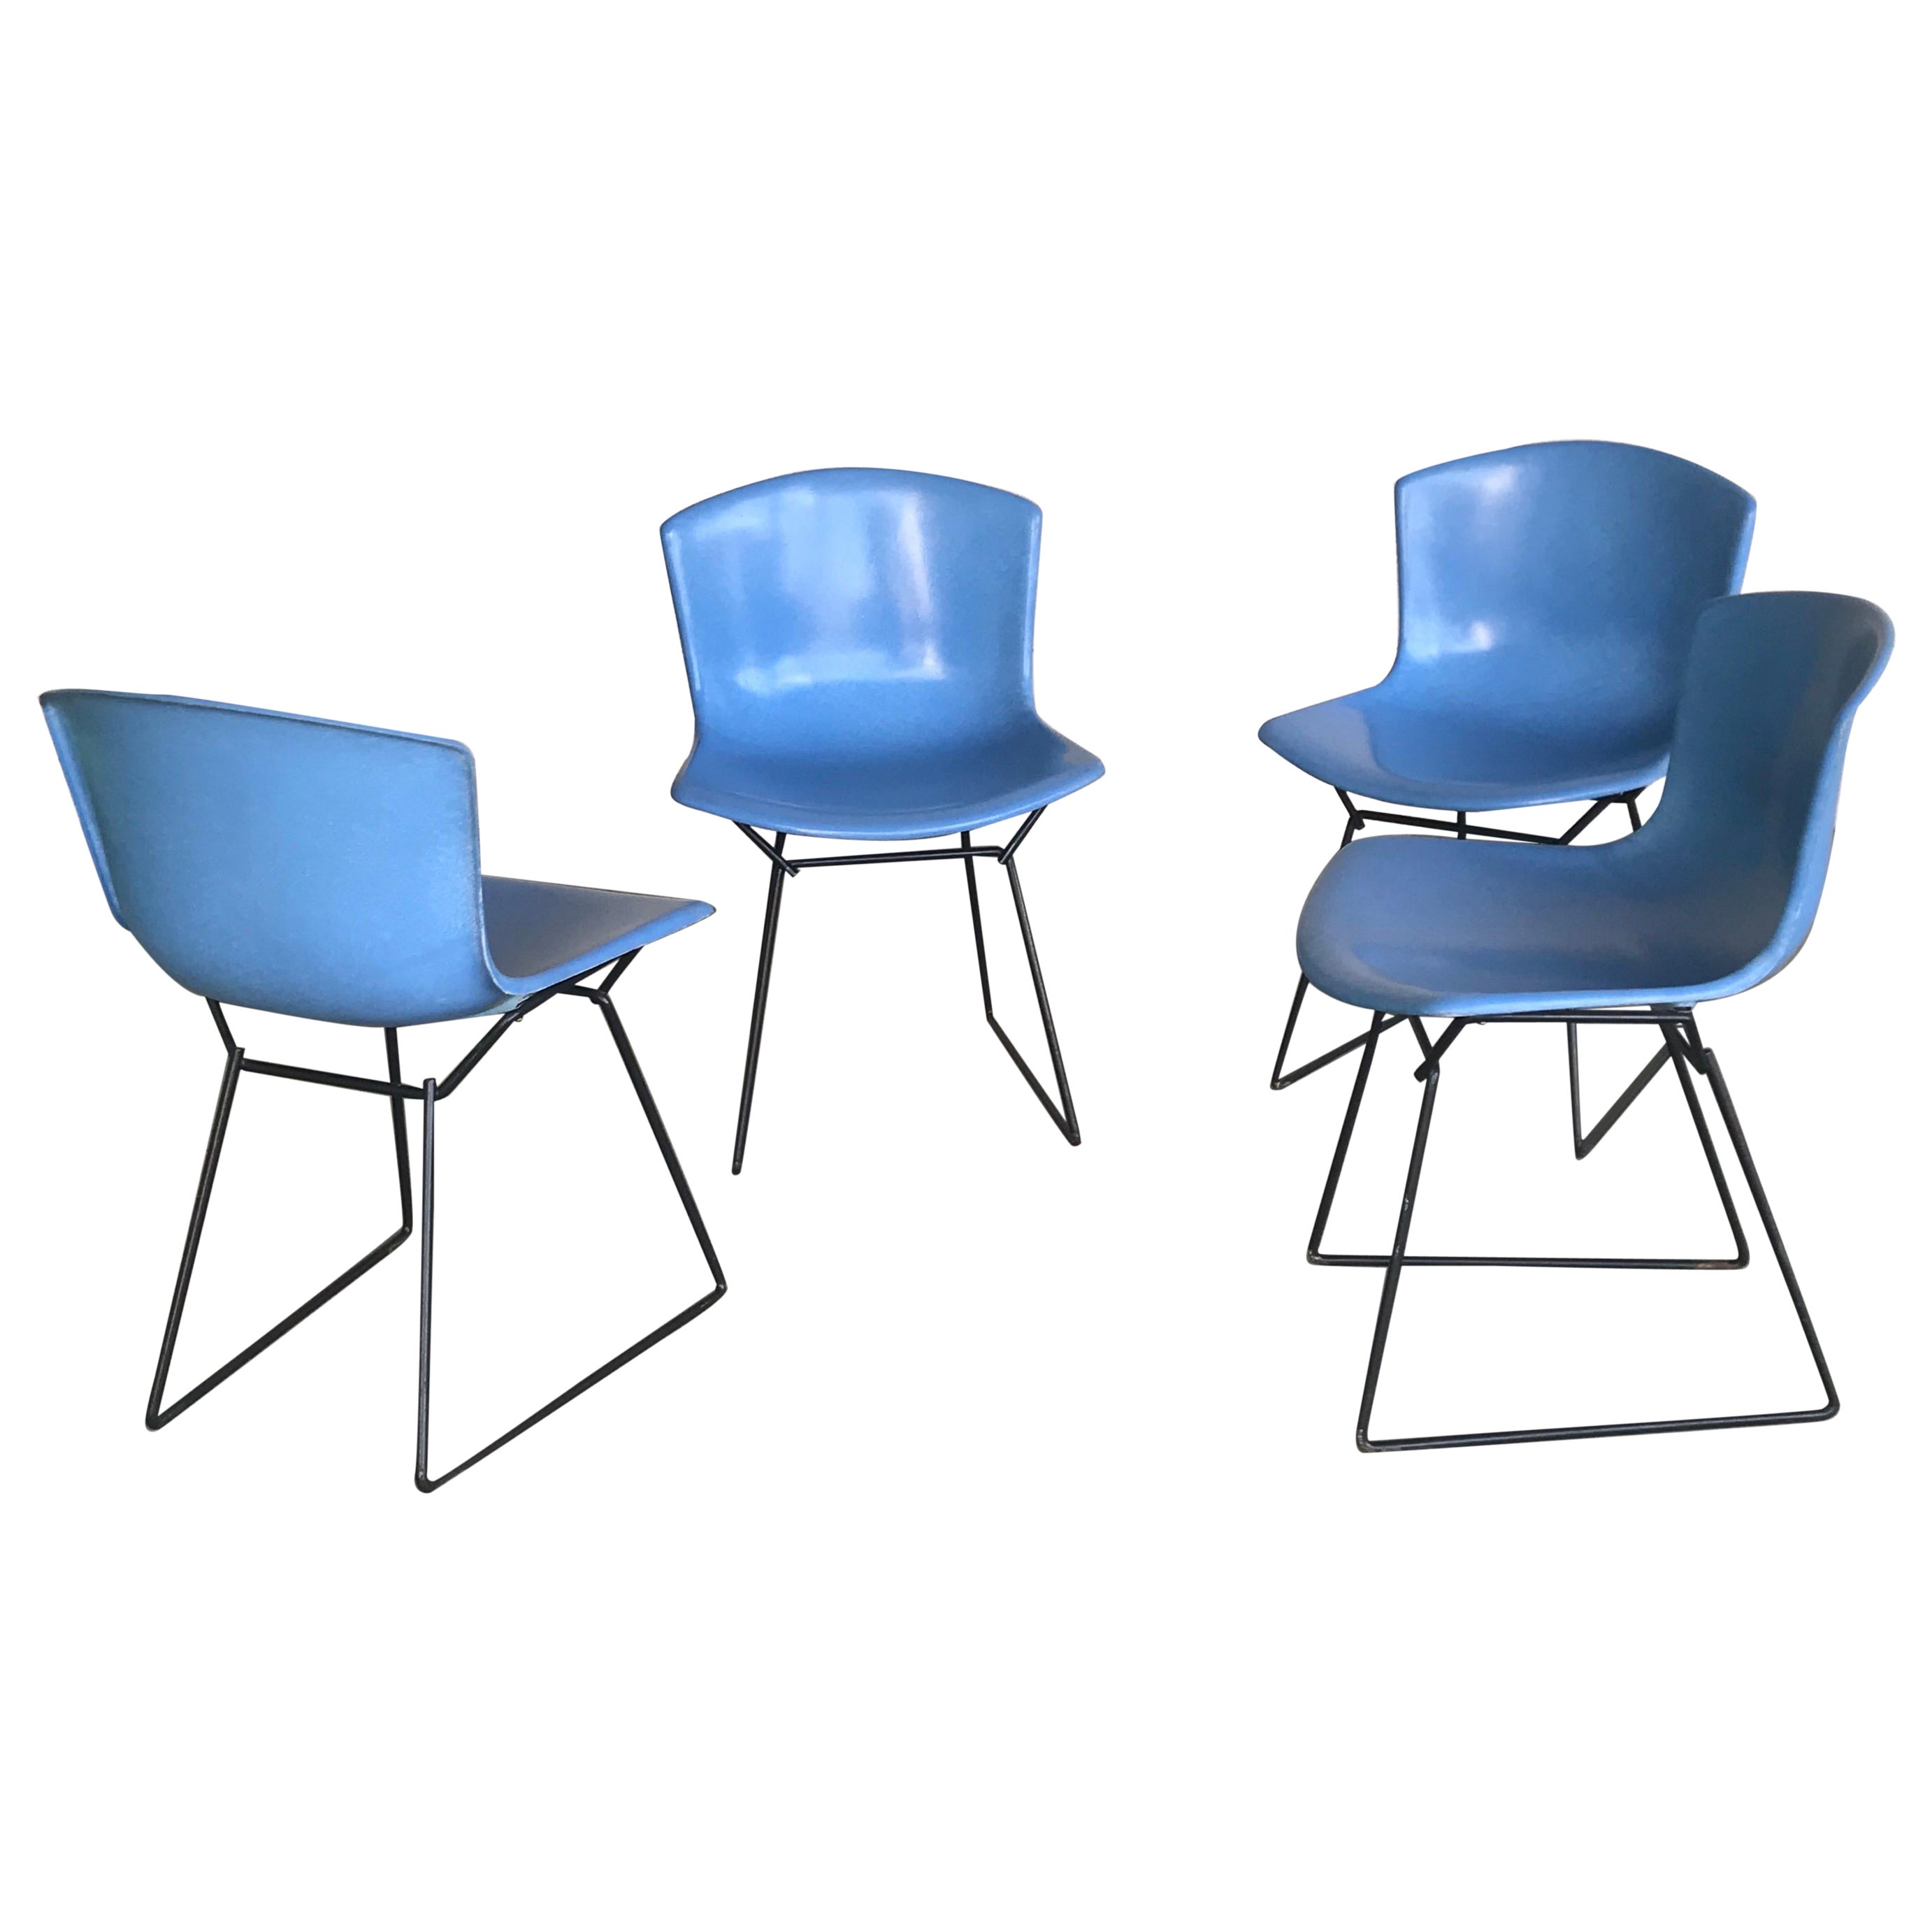 Fiberglass Dining Room Chairs